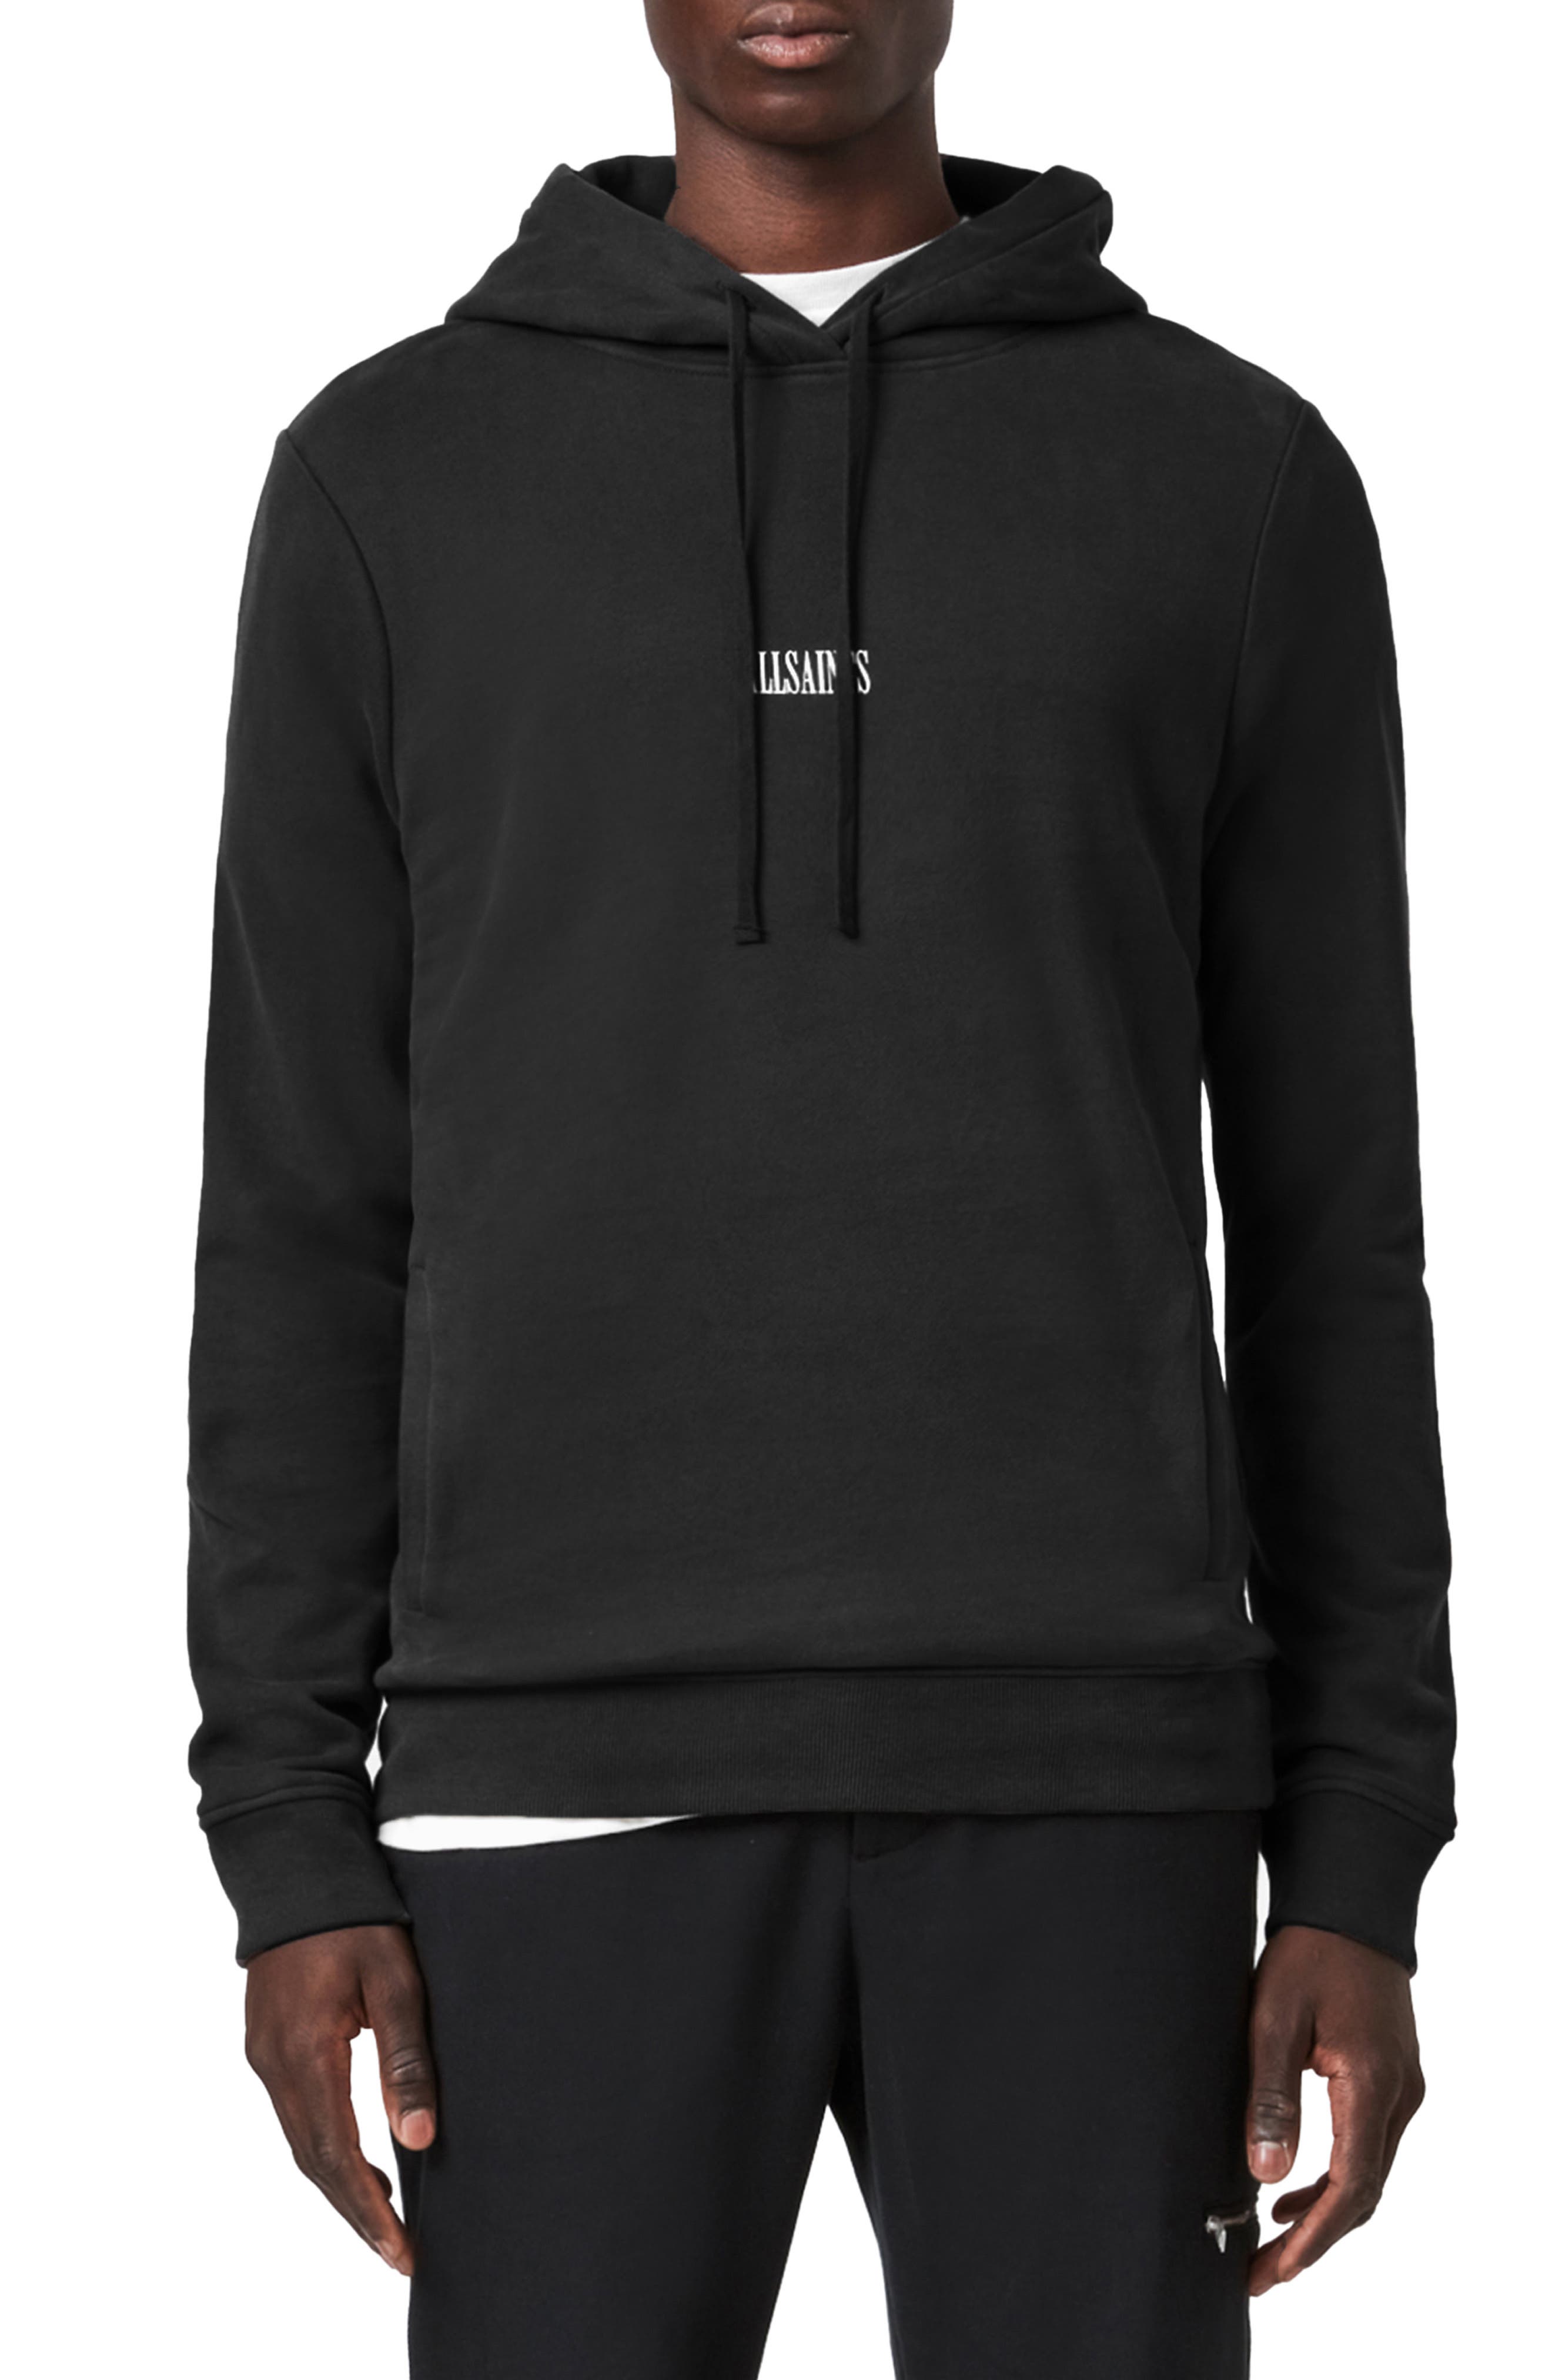 Cool Hoodies,Men Plus Size Fashion Printed Zipper Pullover Long Sleeve Sweatshirt Tops Blouse for Men Teen Boys 